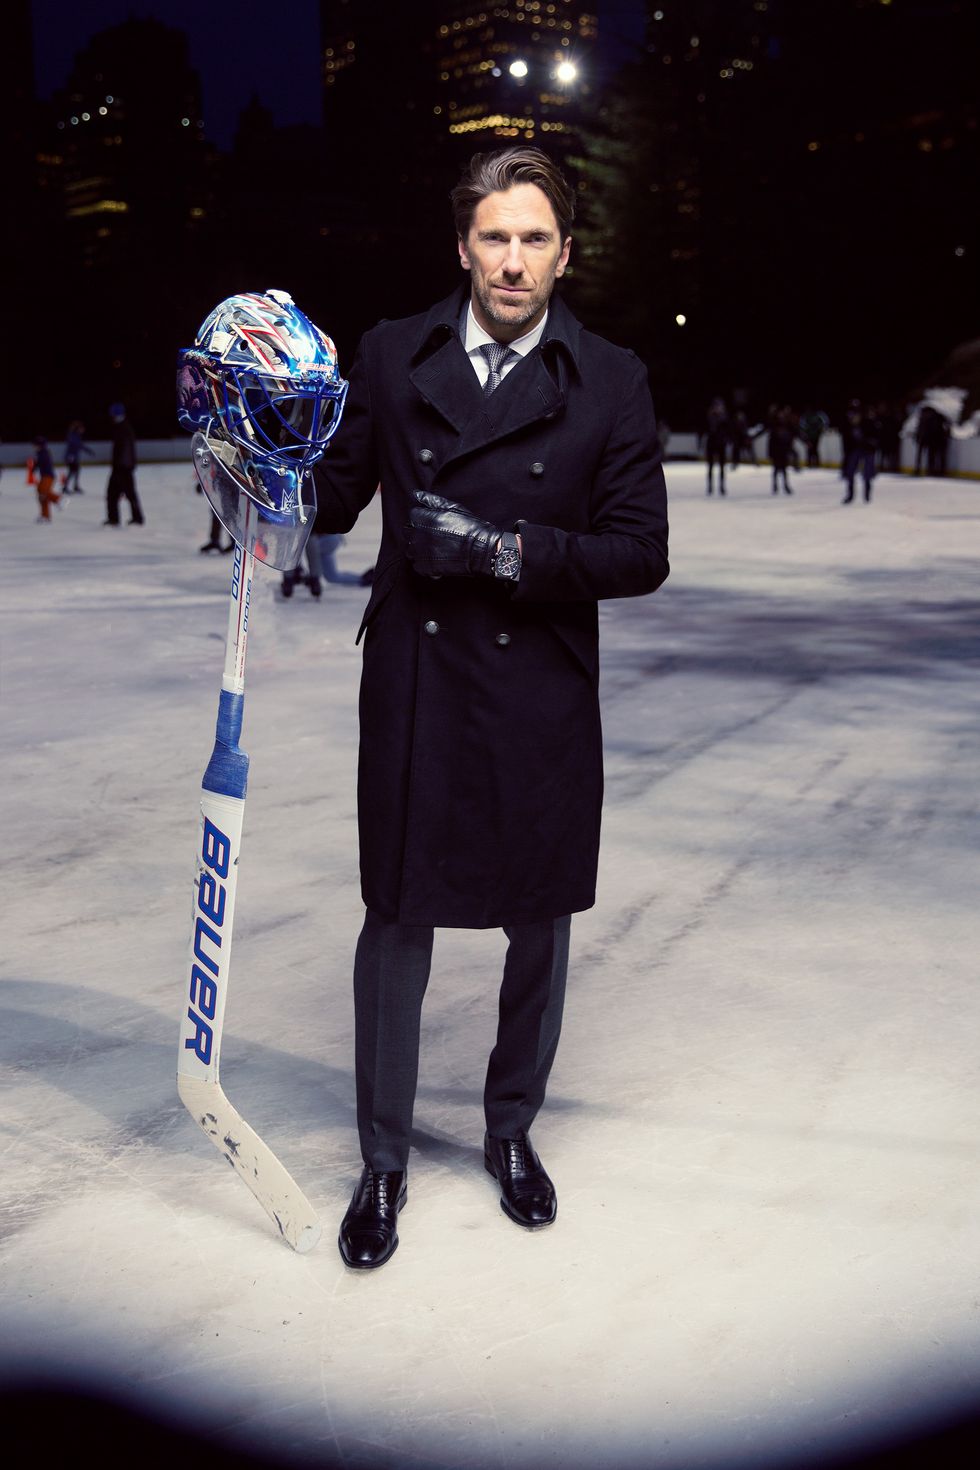 To suit up an Ice Hockey superstar: Henrik Lundqvist ft. Stylist Stephen F